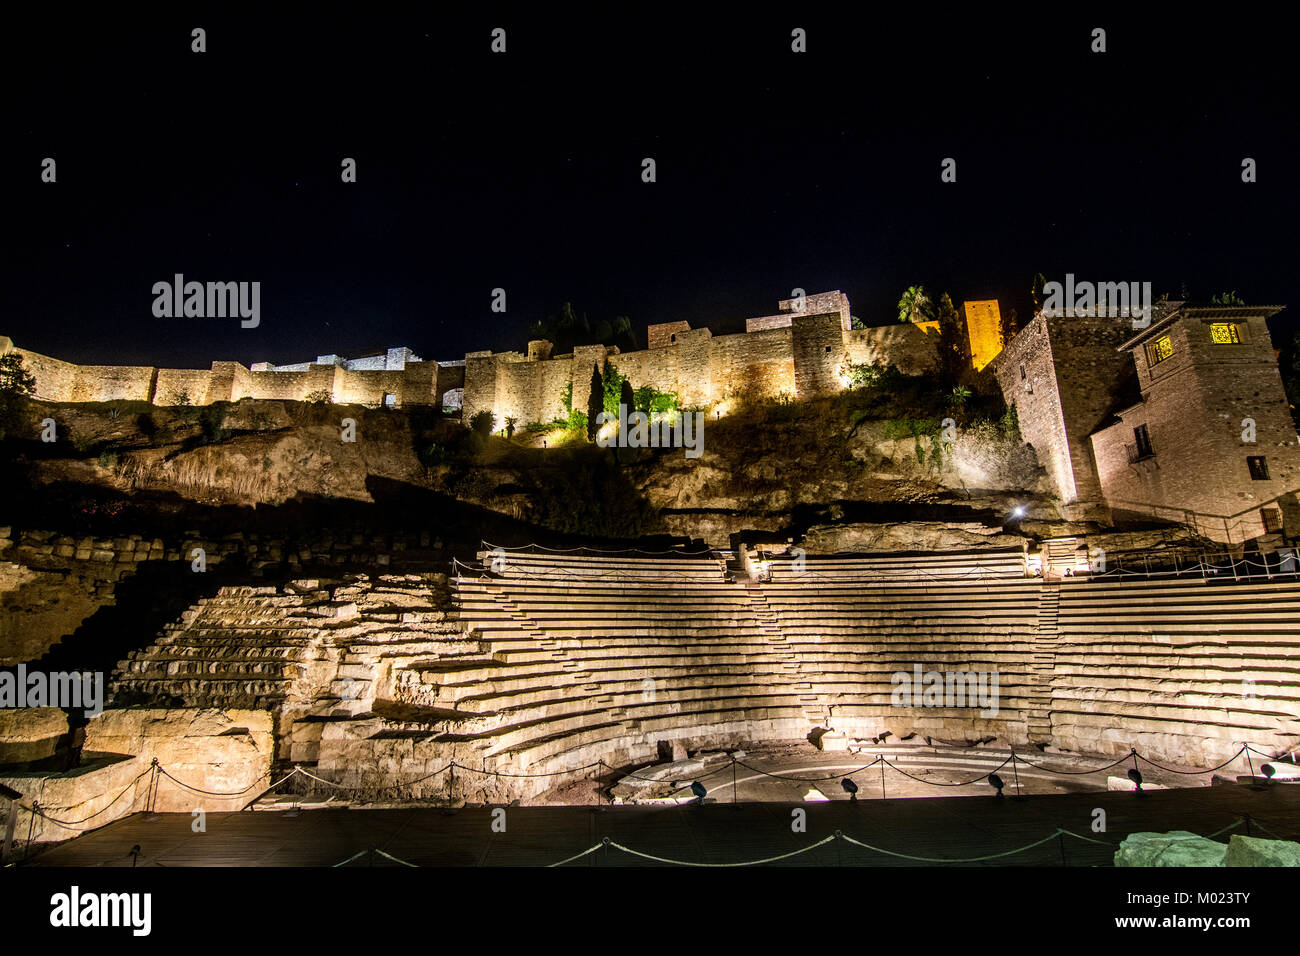 MALAGA, Andalusien/Spanien - Oktober 05, 2017: antike Amphitheater BEI NACHT Stockfoto